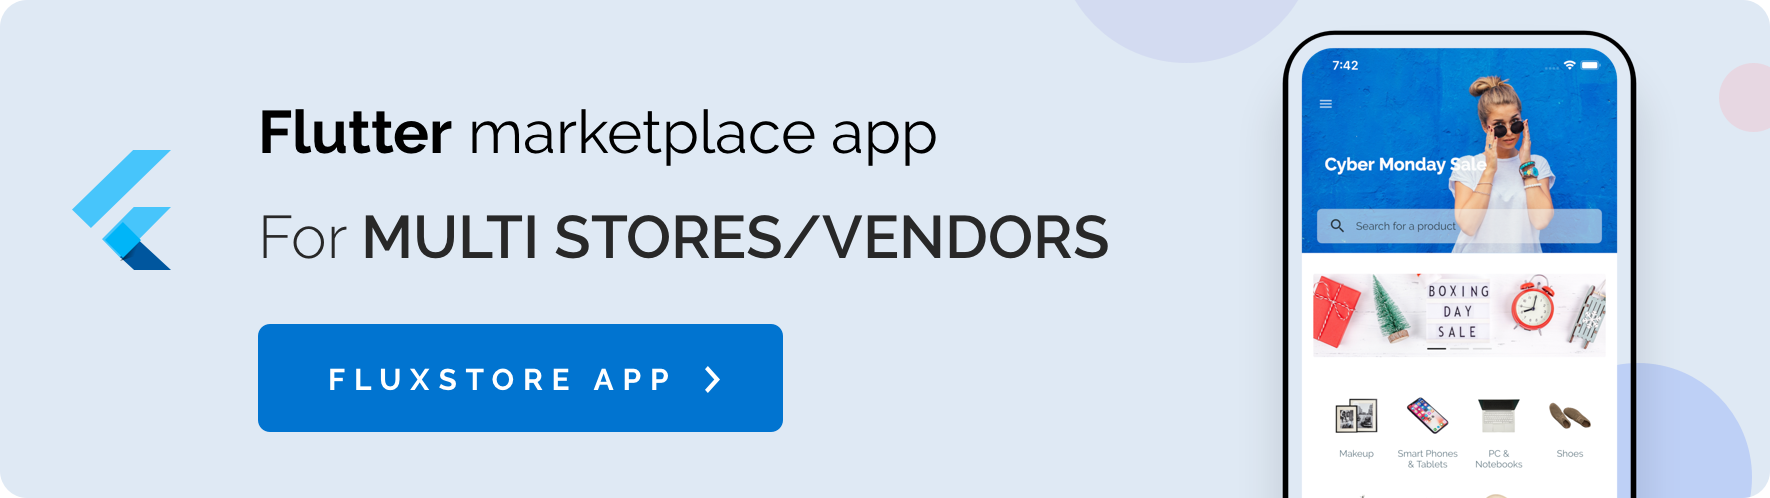 CeStore - ReactJS web app & React Native mobile app for e-commerce - 15